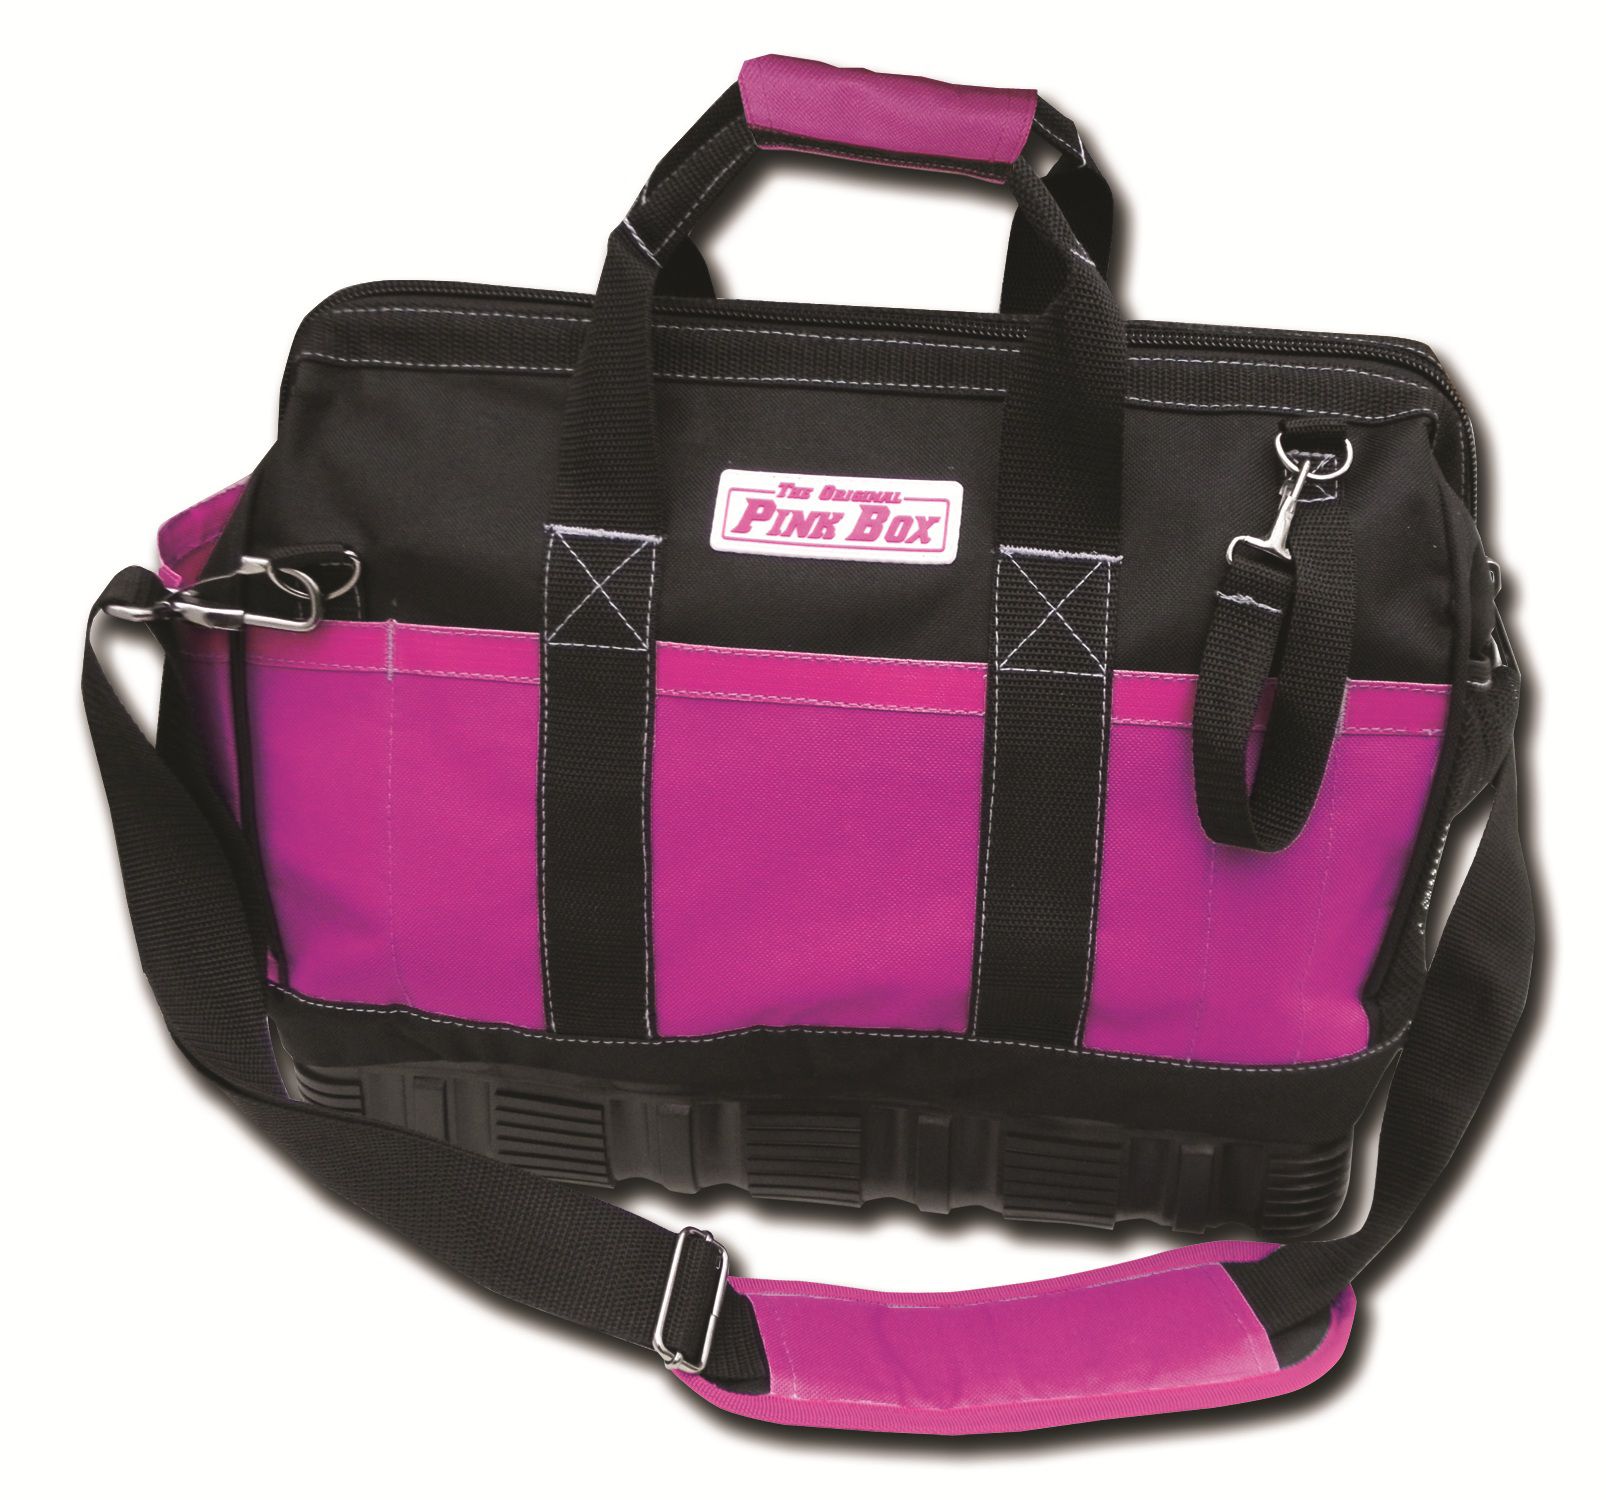 The Original Pink Box PINK 15" Rubber Base Tool Bag